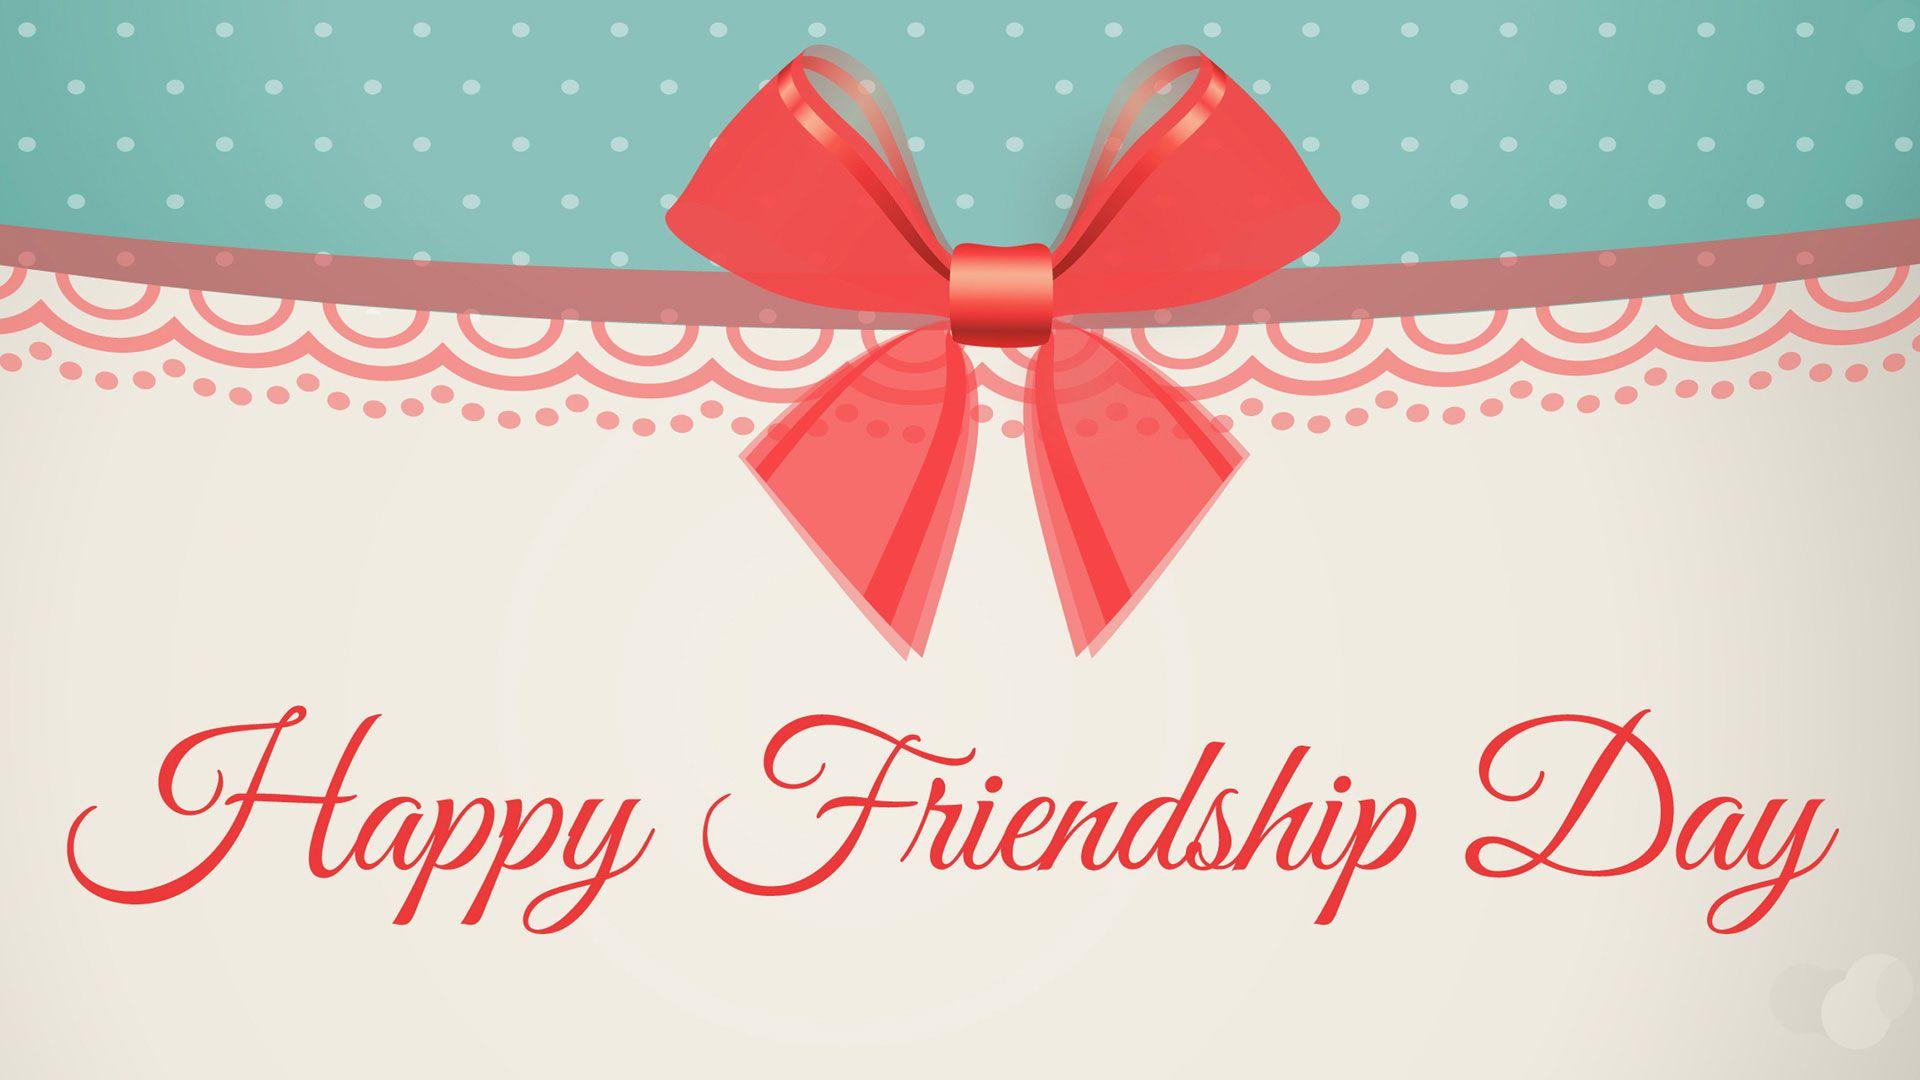 Friendship Day HD Image Wallpaper Pics Photo Free Download